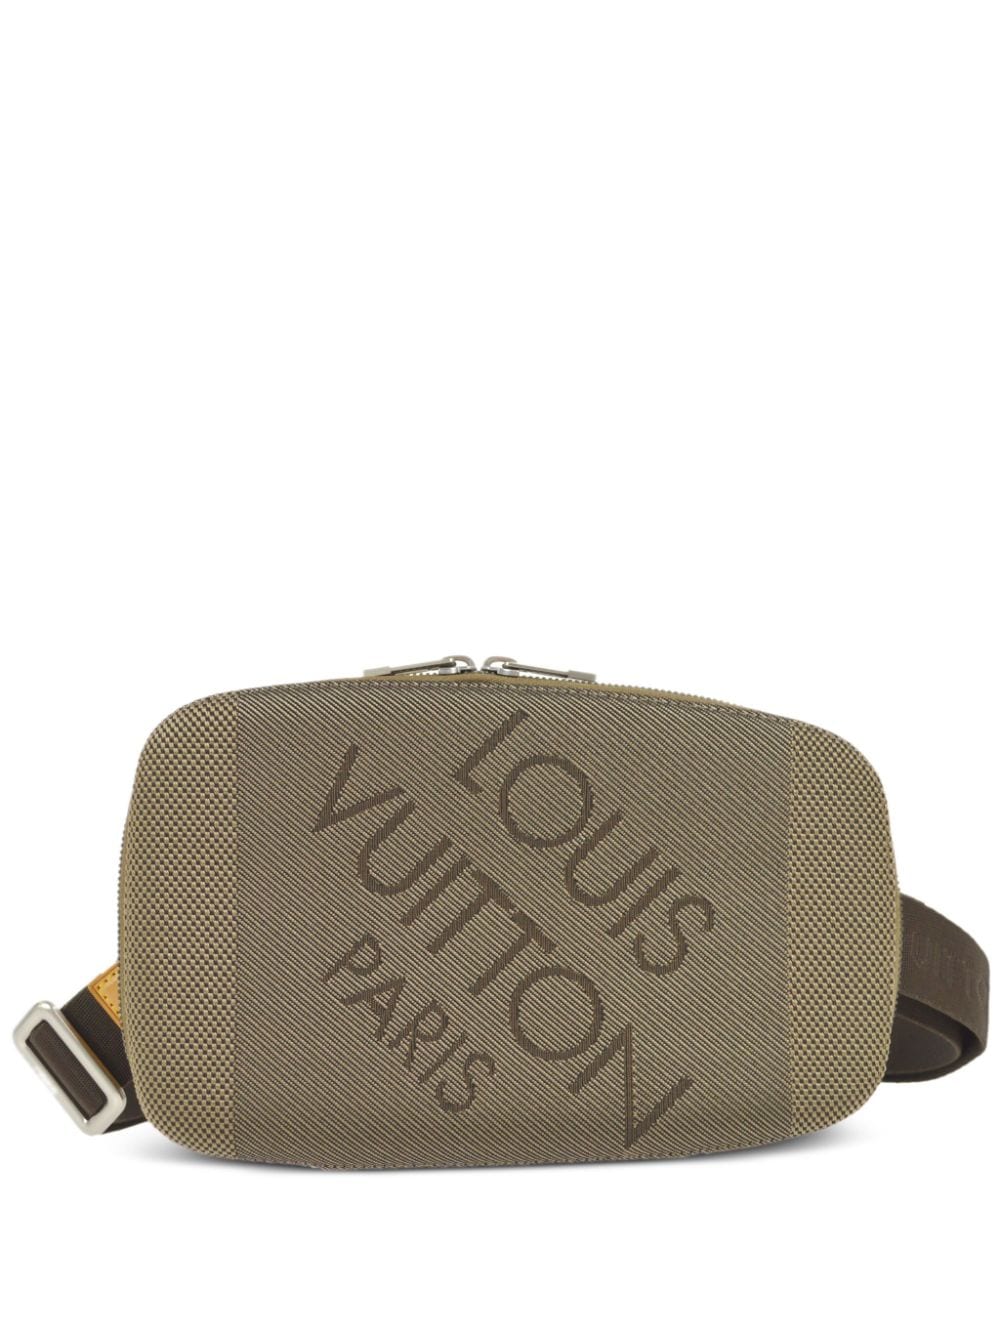 2ManyAddictions2LittleTime  Louis vuitton waist bag, Vintage